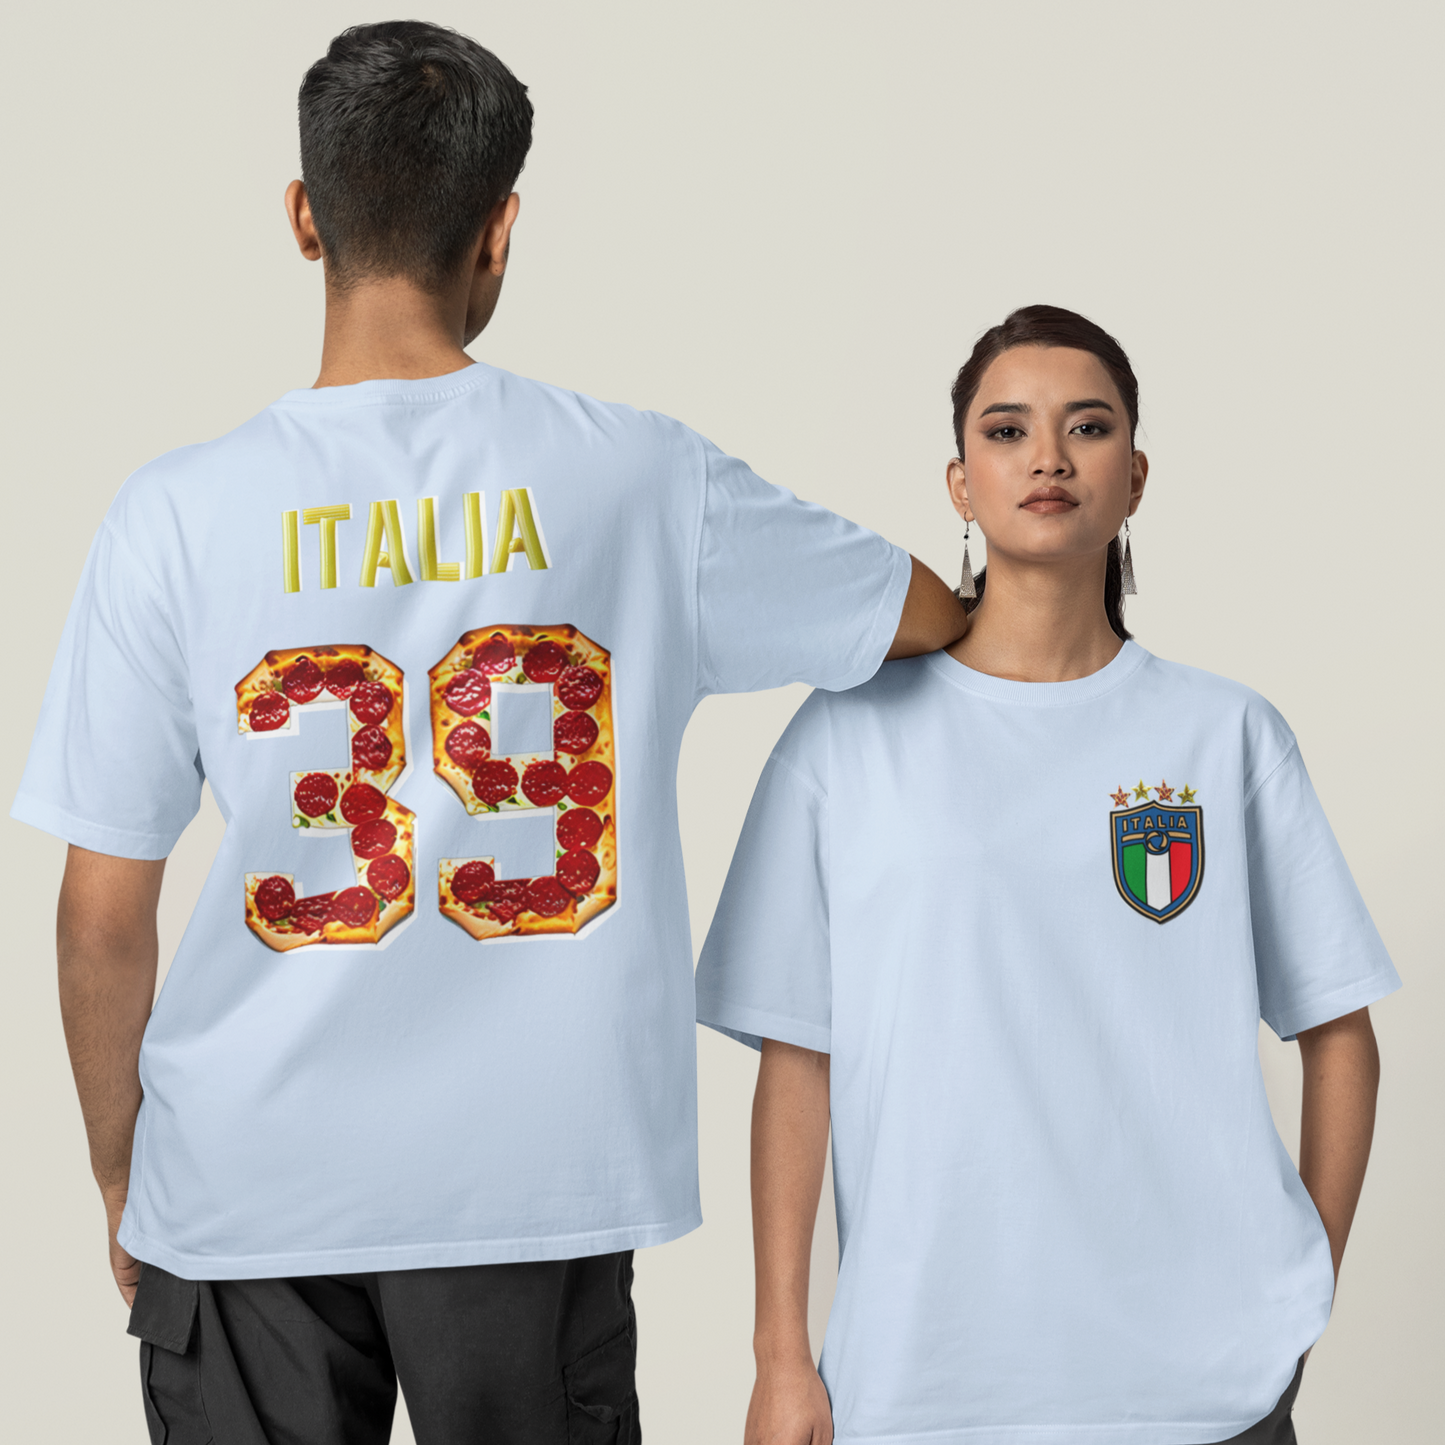 Italy Pizza Pasta Jersey - T-Shirt Unisex